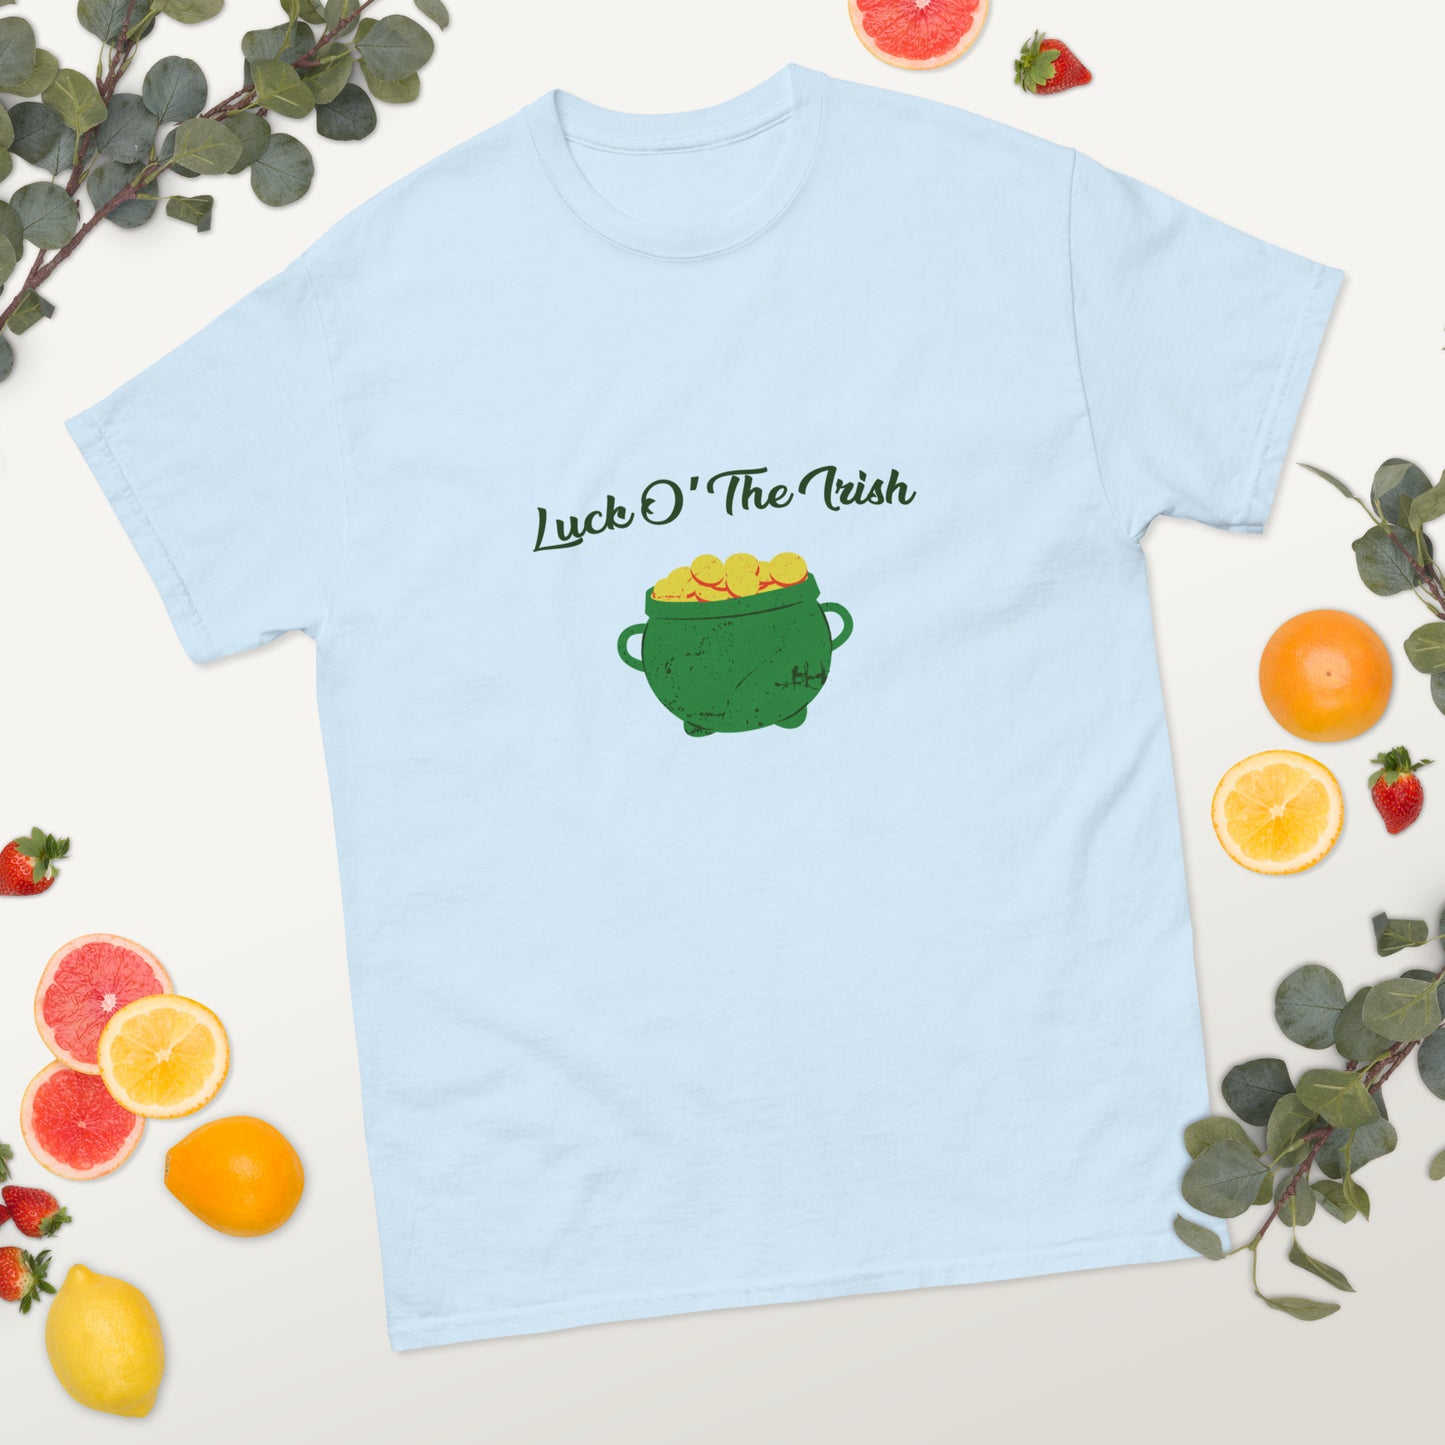 Sustainable fashion choice "Luck O’ The Irish" men's t-shirt